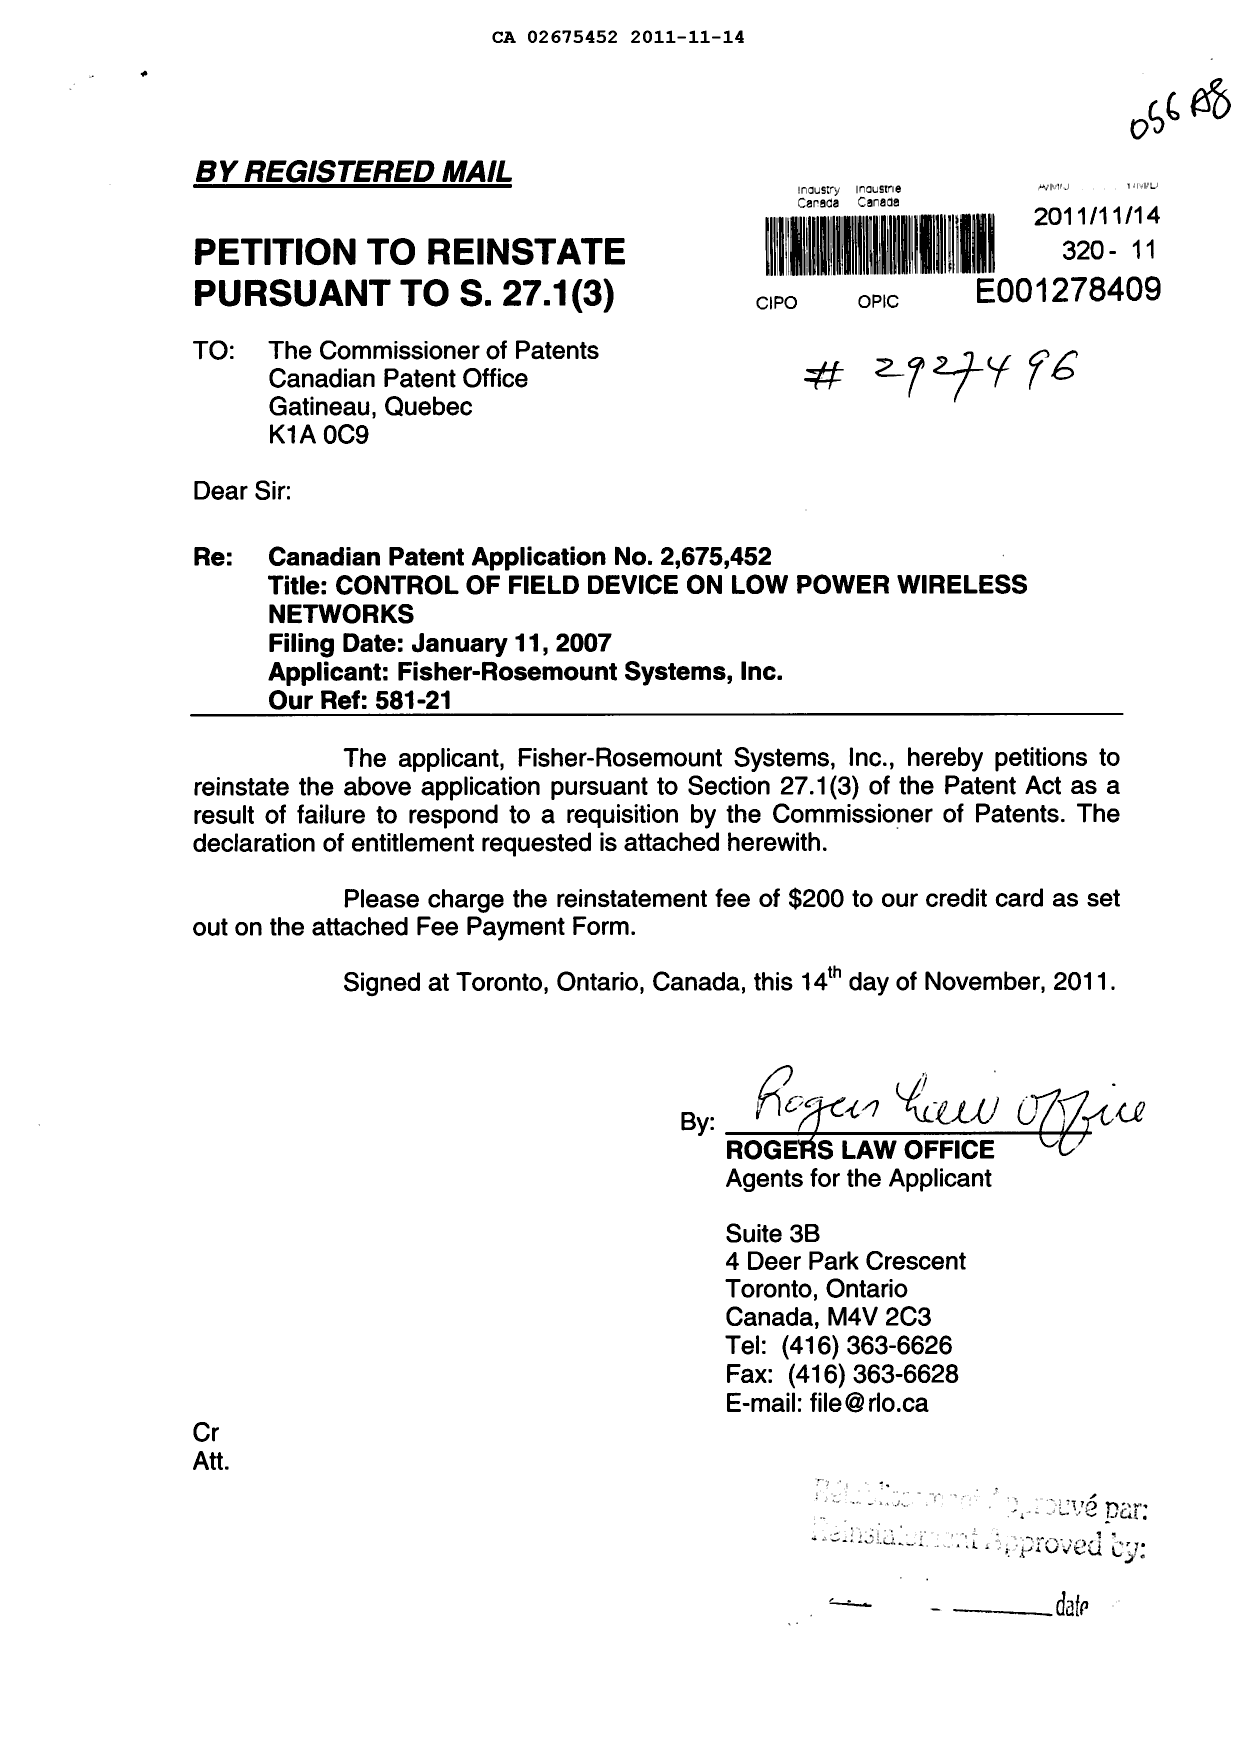 Canadian Patent Document 2675452. Correspondence 20111114. Image 2 of 4